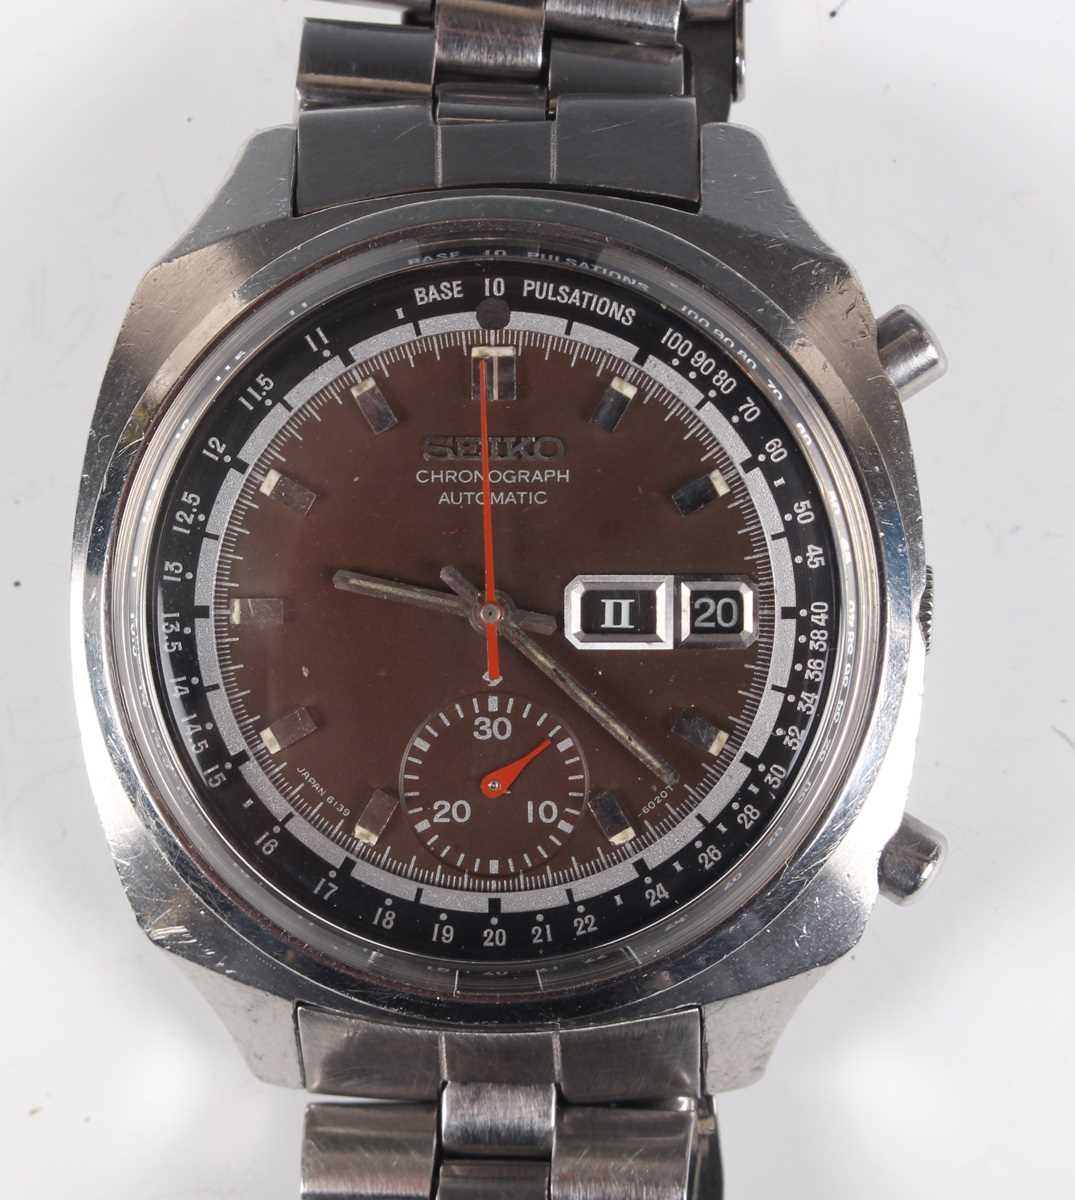 A Seiko Chronograph Automatic stainless steel gentleman's bracelet wristwatch, Ref. 6139-6020, circa